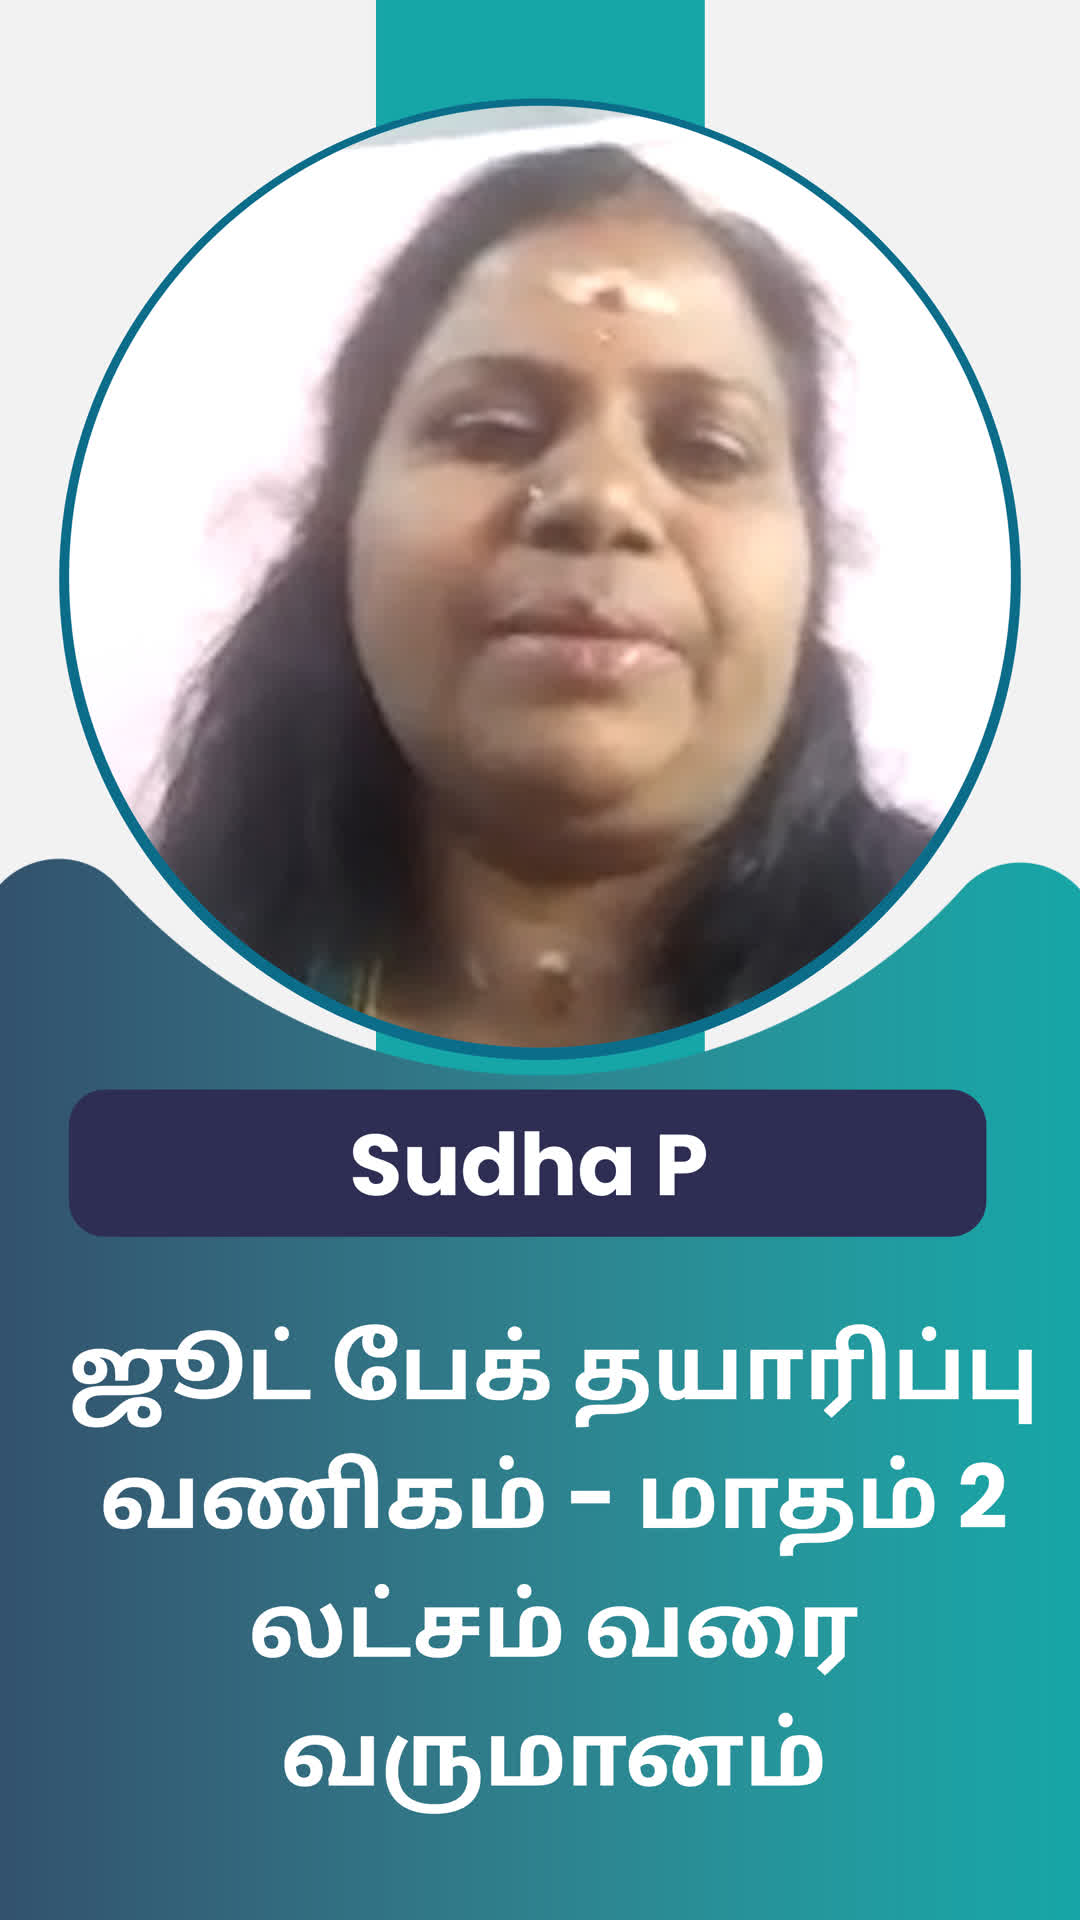 pSudha palanisamy's Honest Review of ffreedom app - Tiruppur ,Tamil Nadu